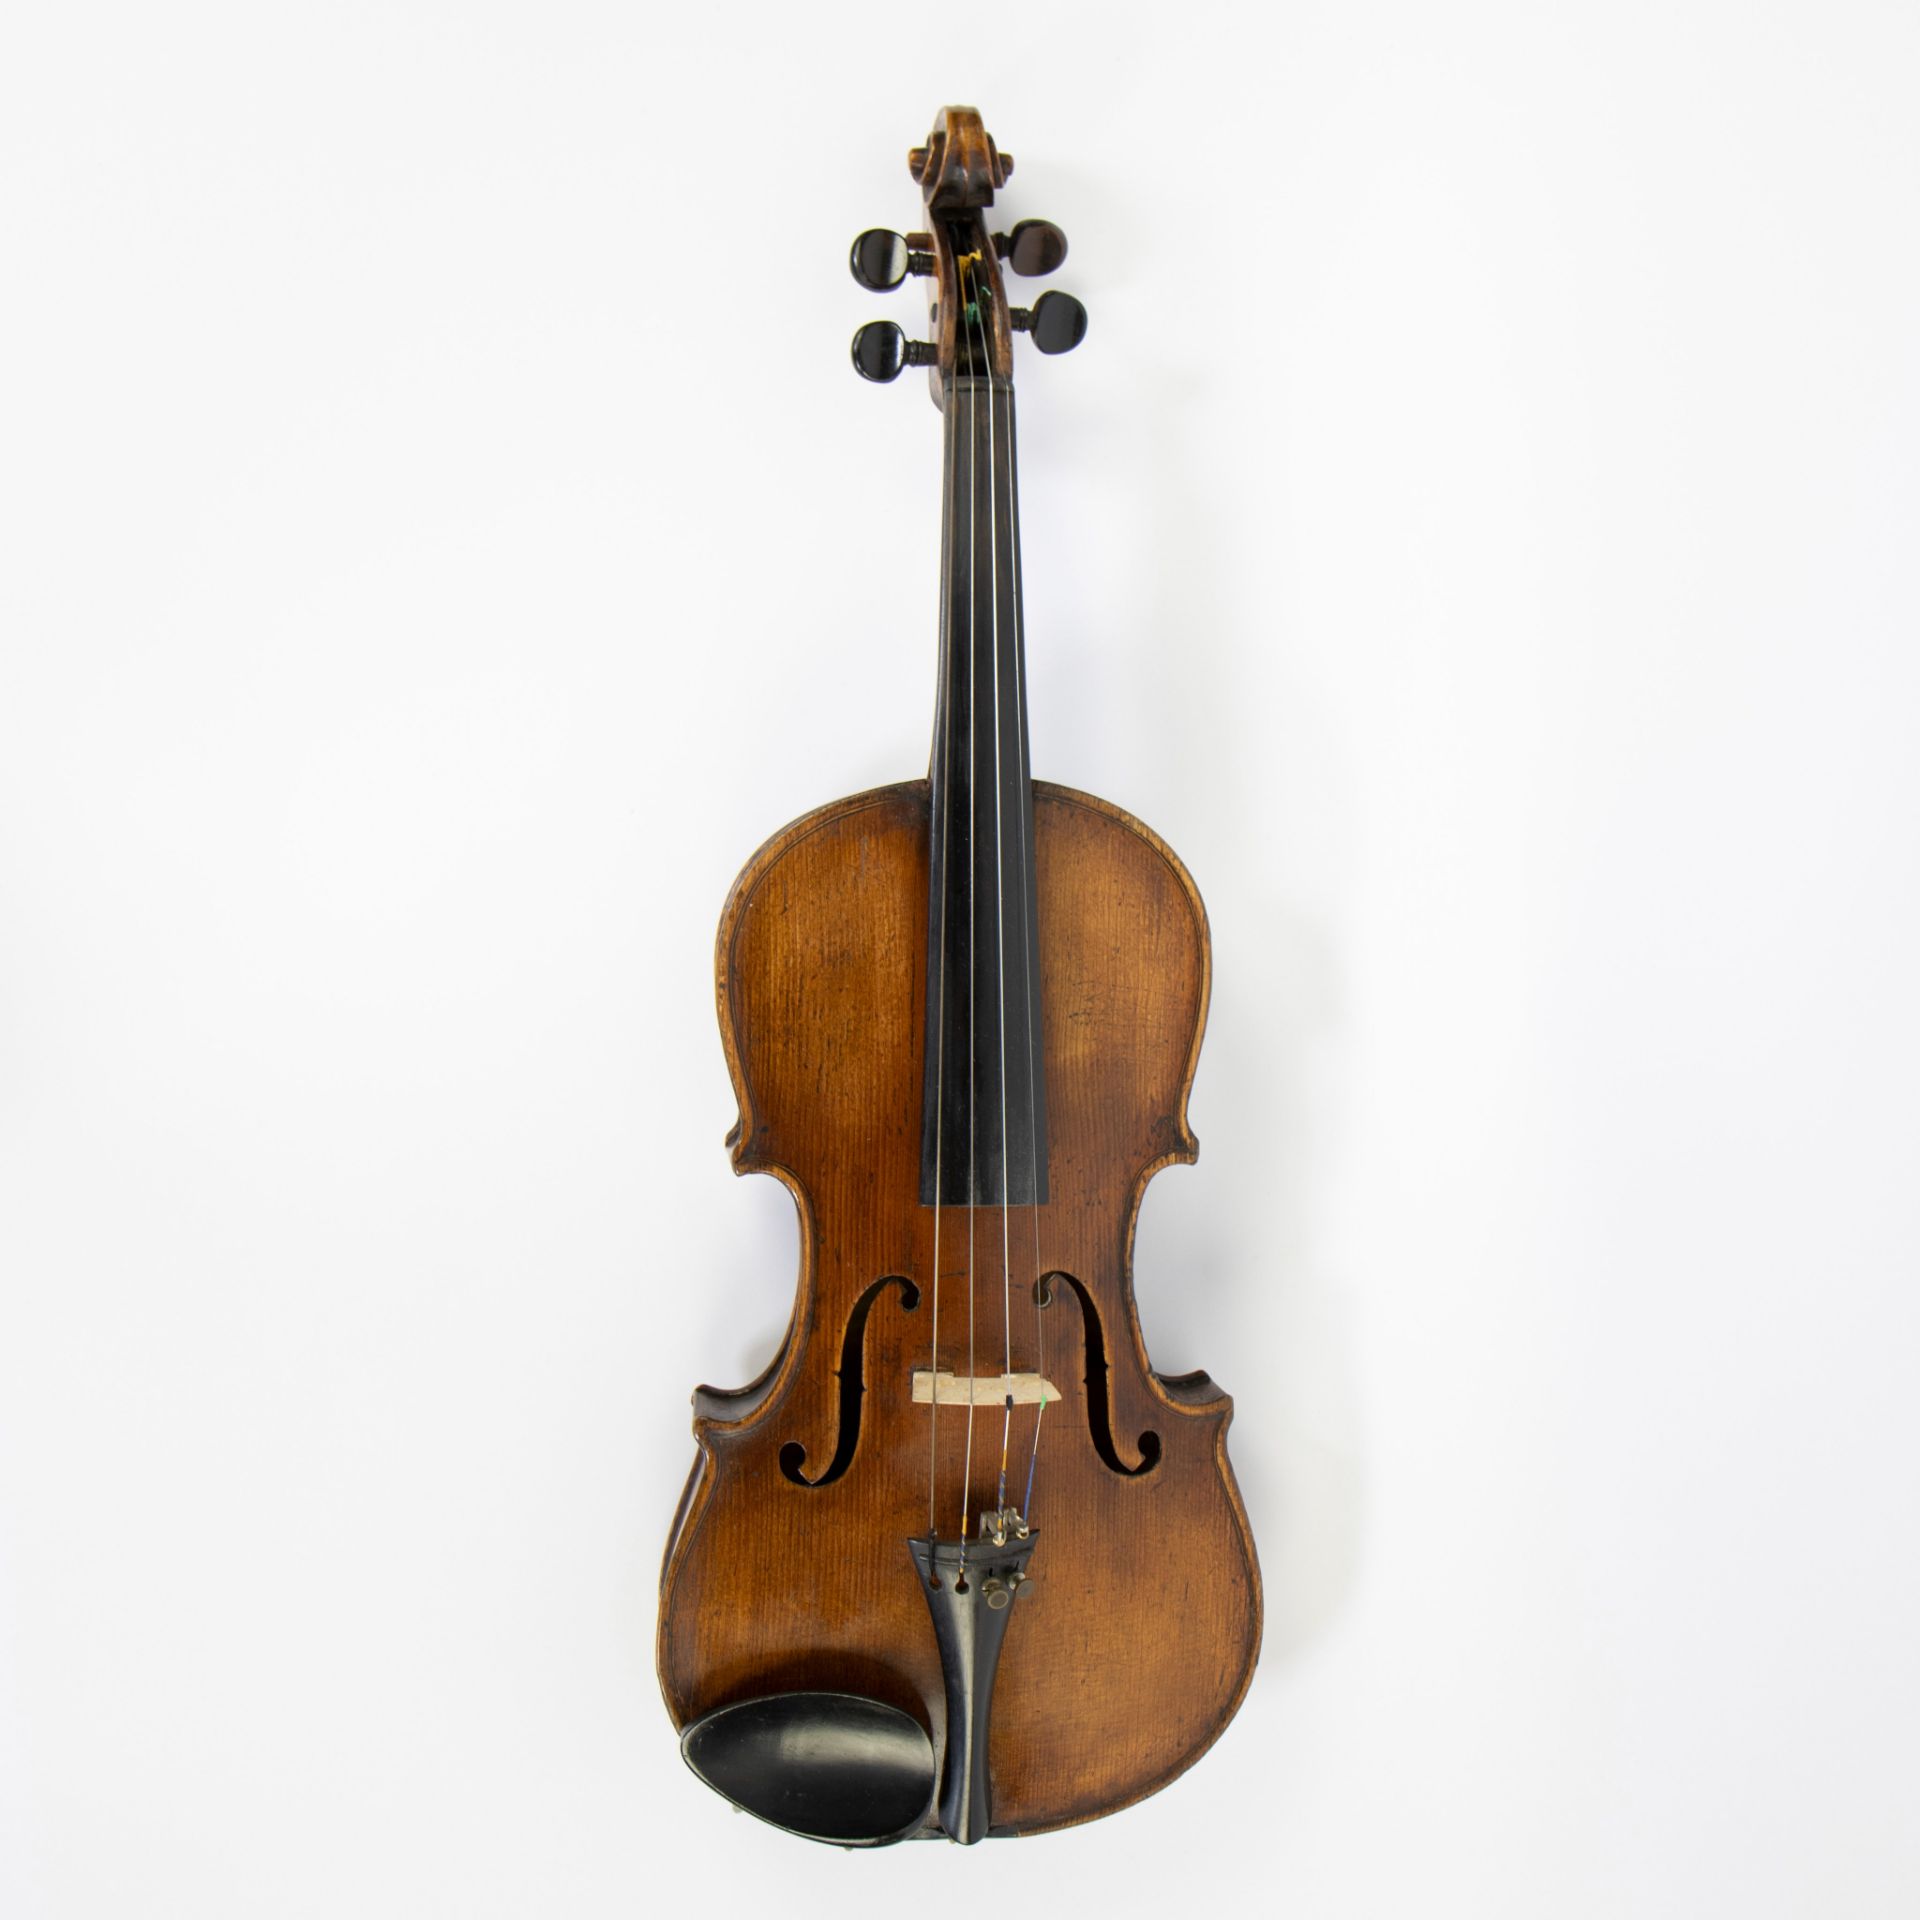 Violin no label, fire stamp heel 'RG', 356mm, wooden case